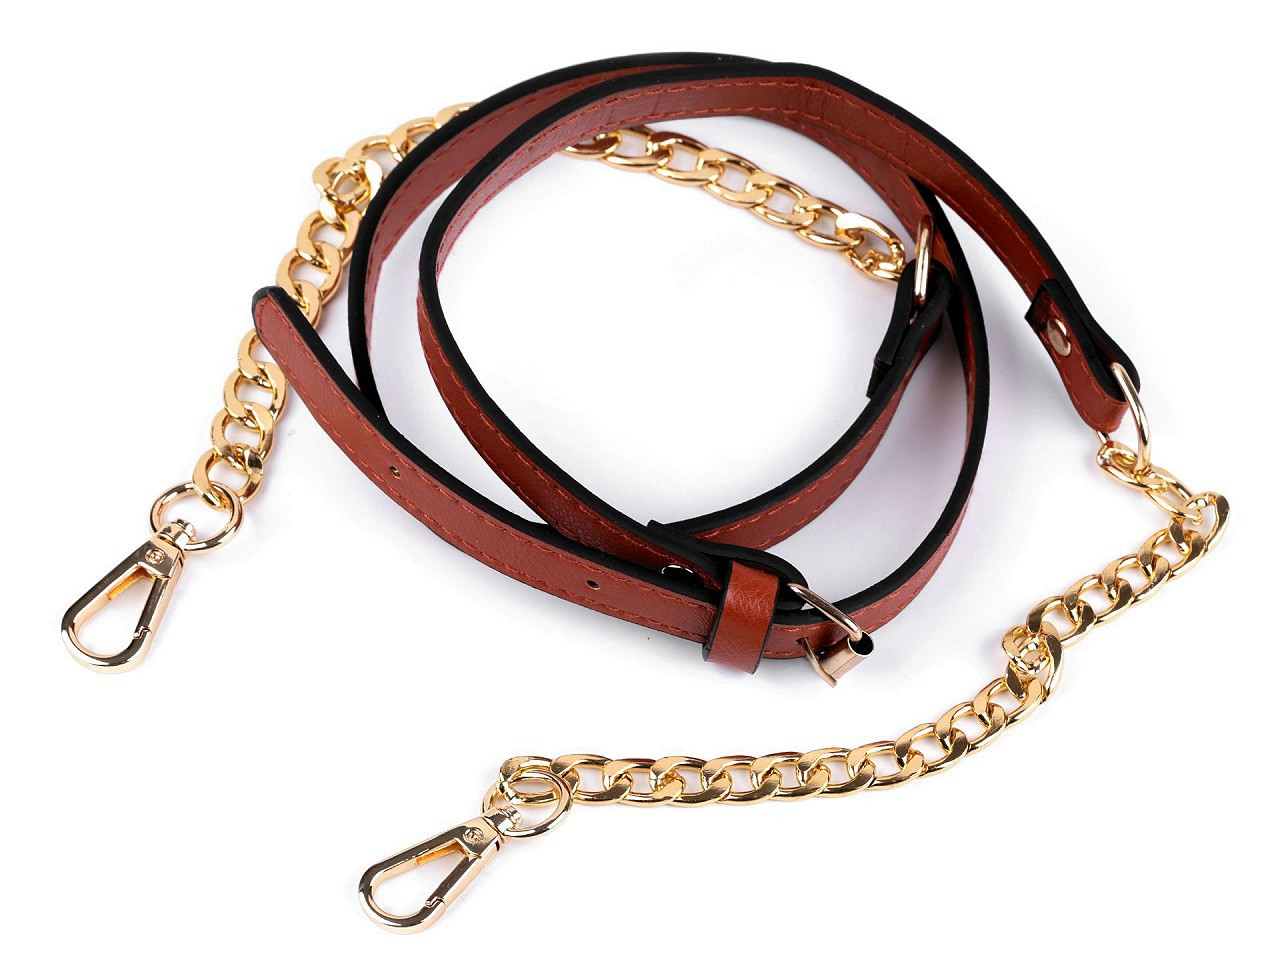 Koženkový popruh / ucho na kabelku s řetízkem a karabinami šíře 1,5 cm, barva 3 hnědá koňak zlatá